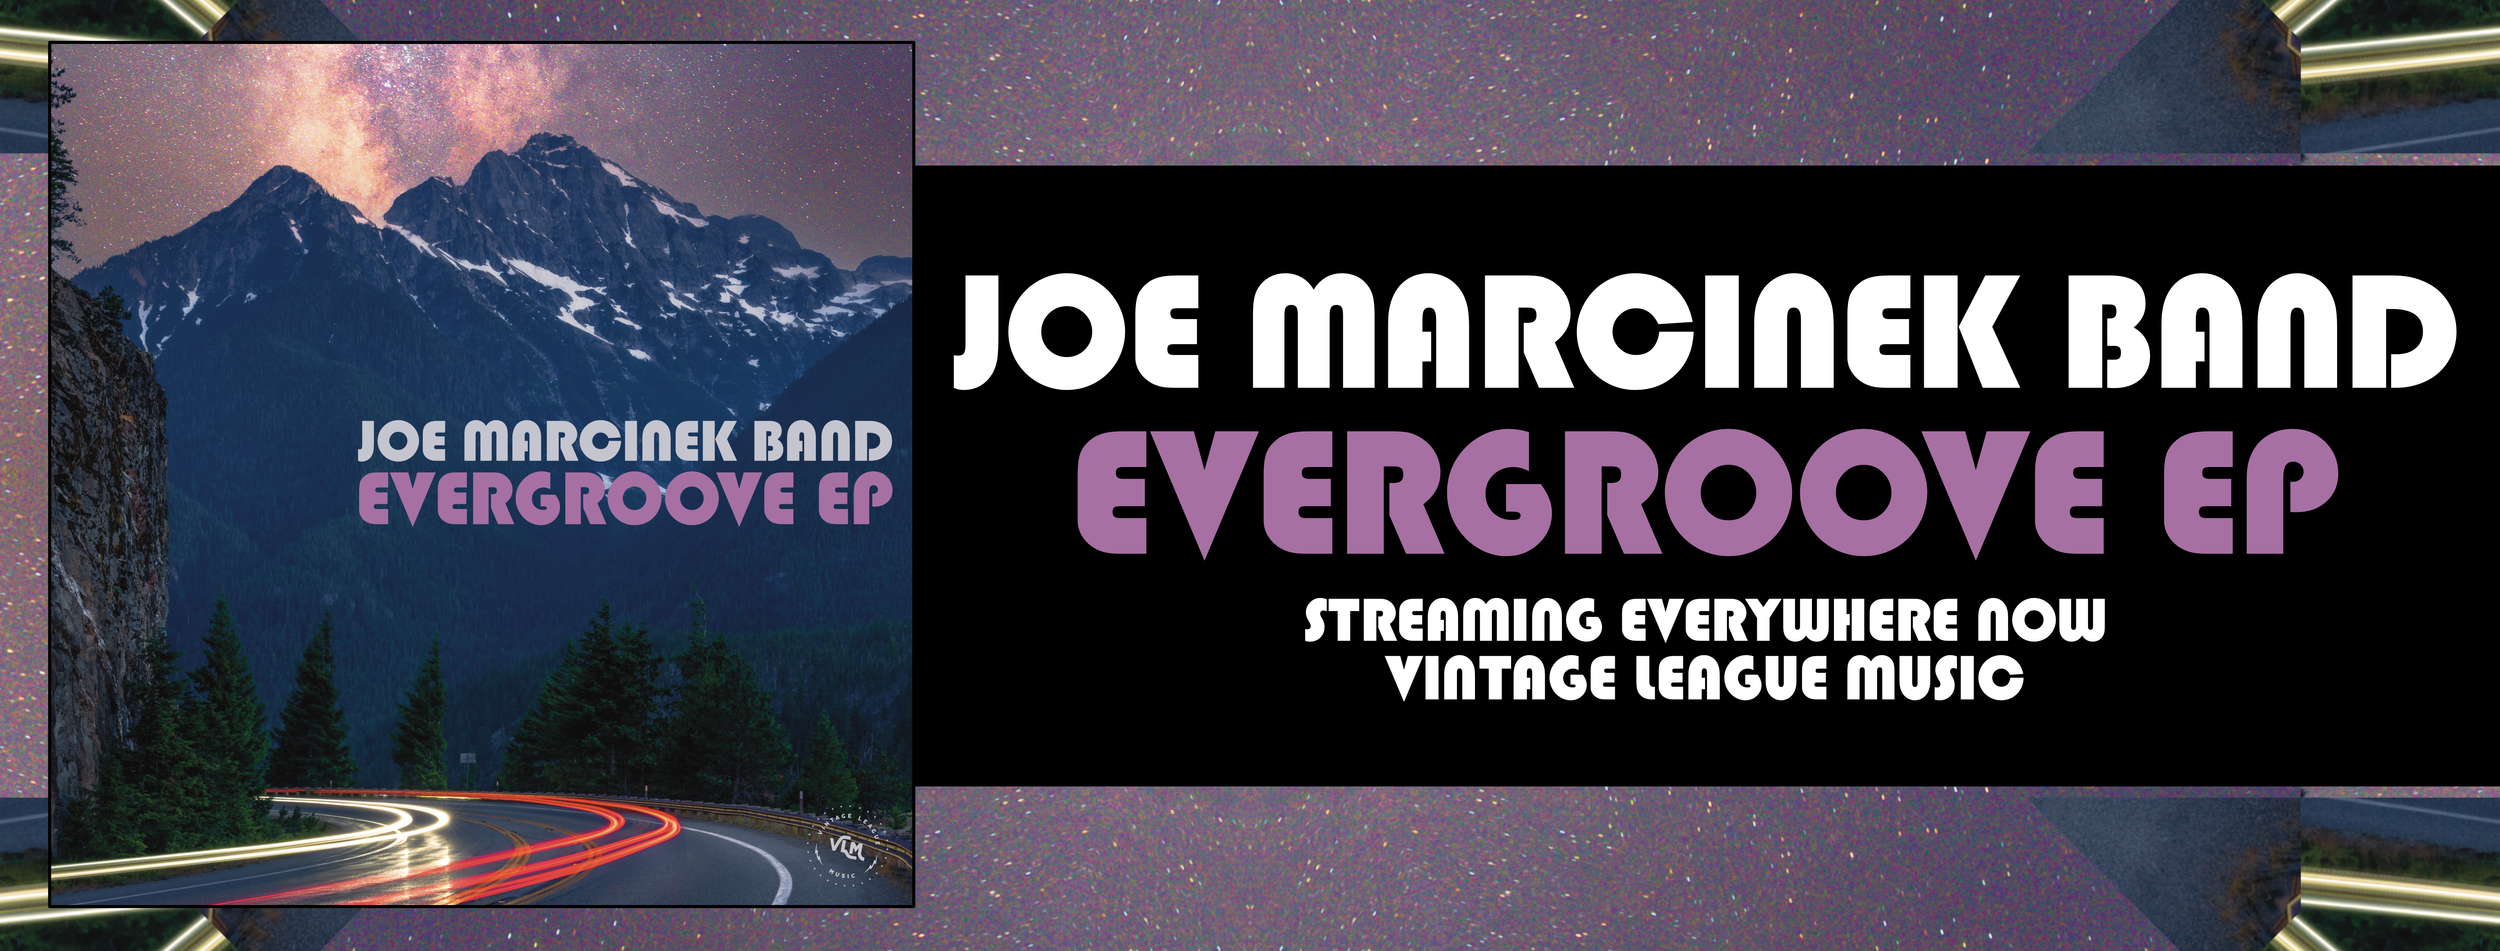 Joe Marcinek Band - Evergroove EP - banner copy@3x.png